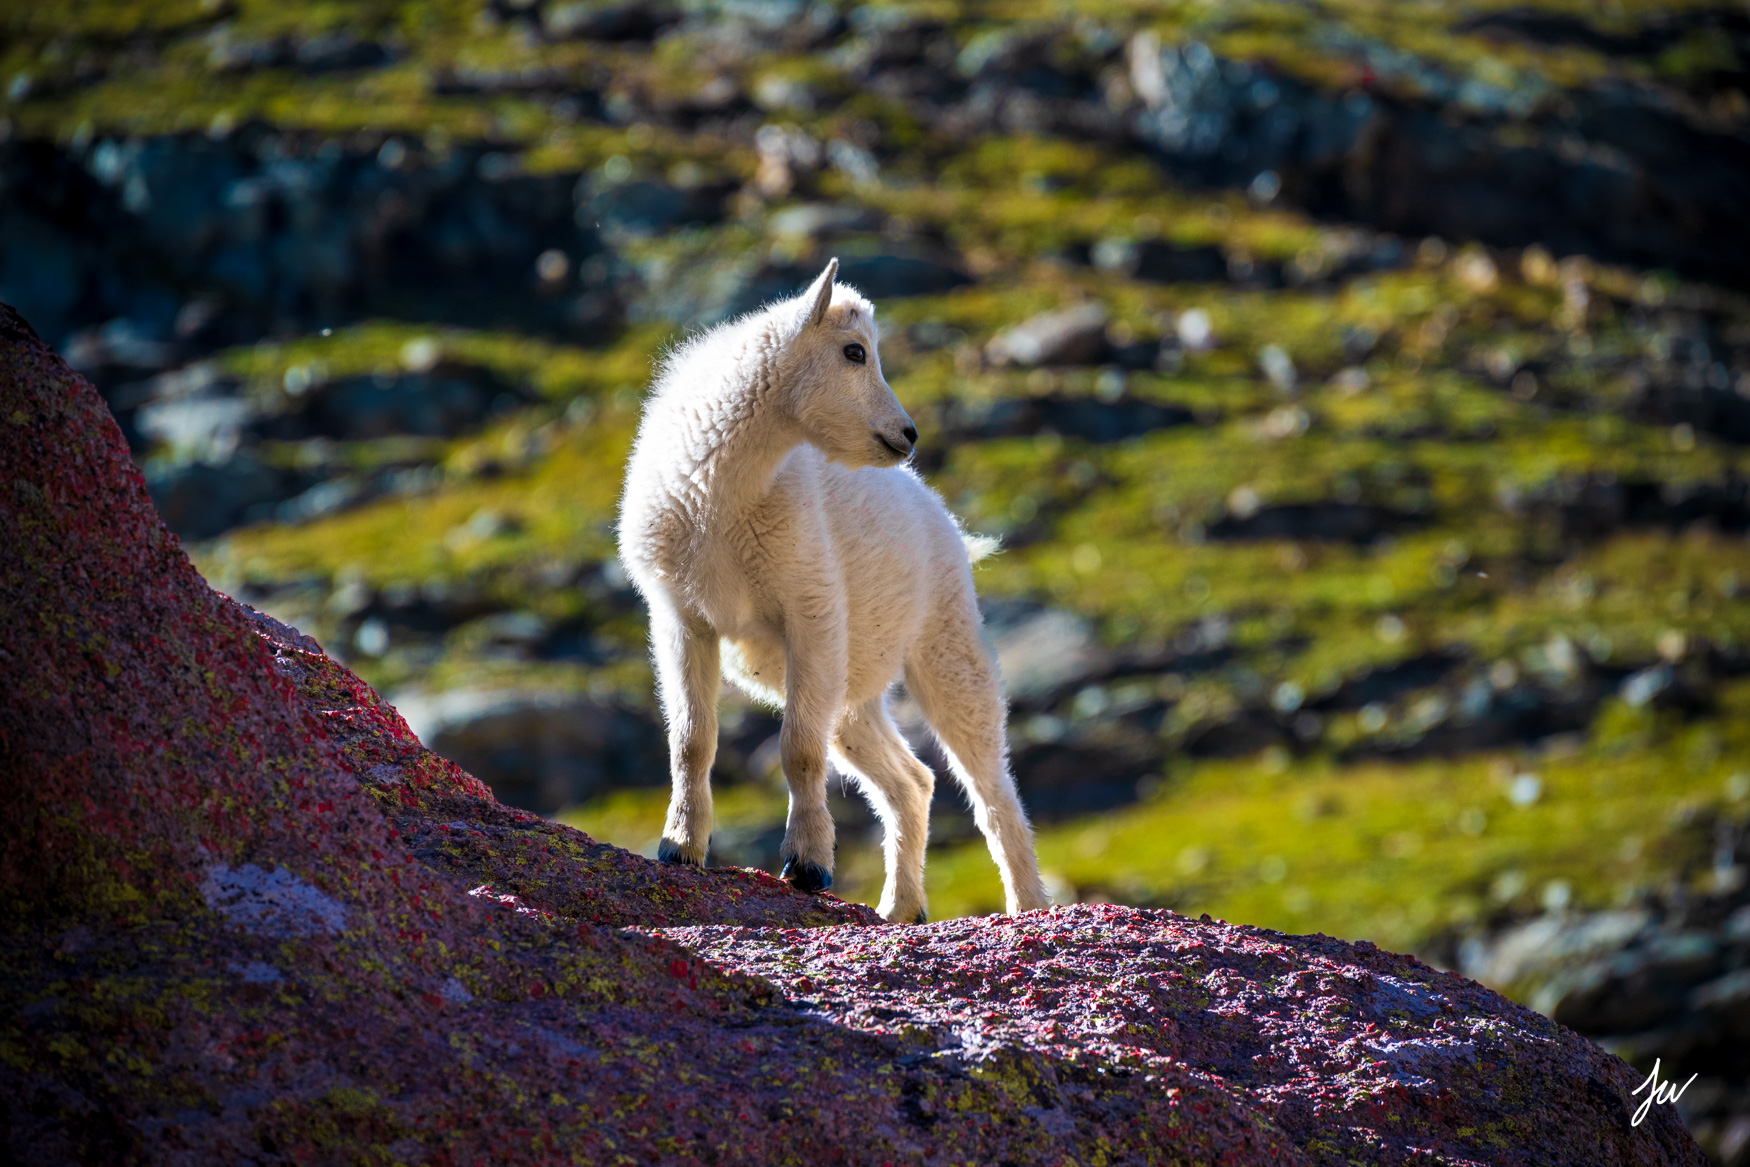 Baby mountain goat in Weminuche Wilderness in Colorado.